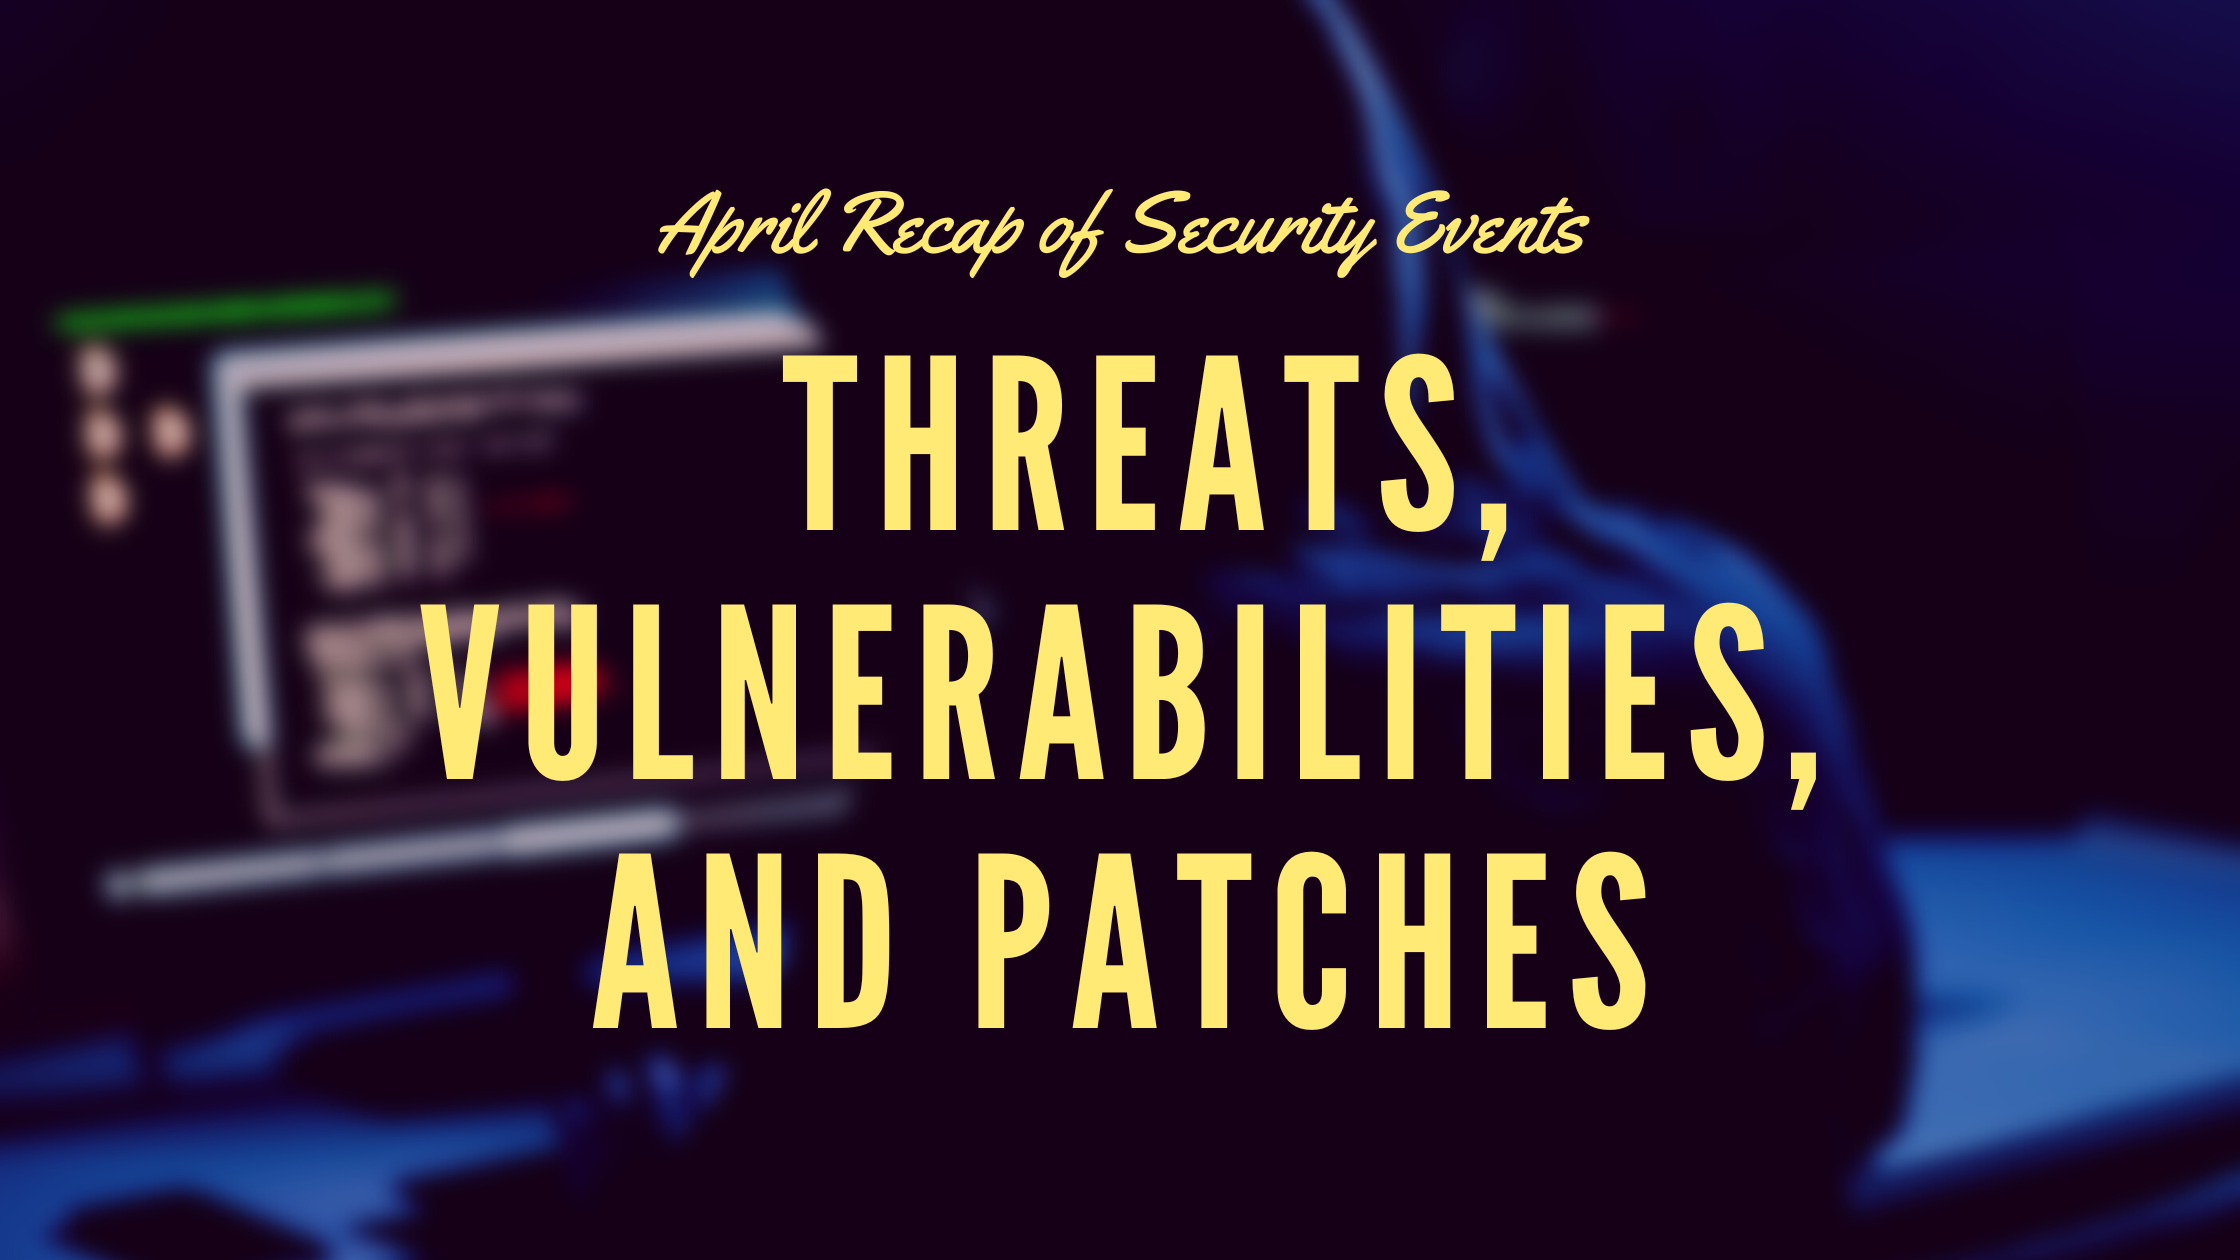 [Security Tip] April 2022 Security Threats Summarized